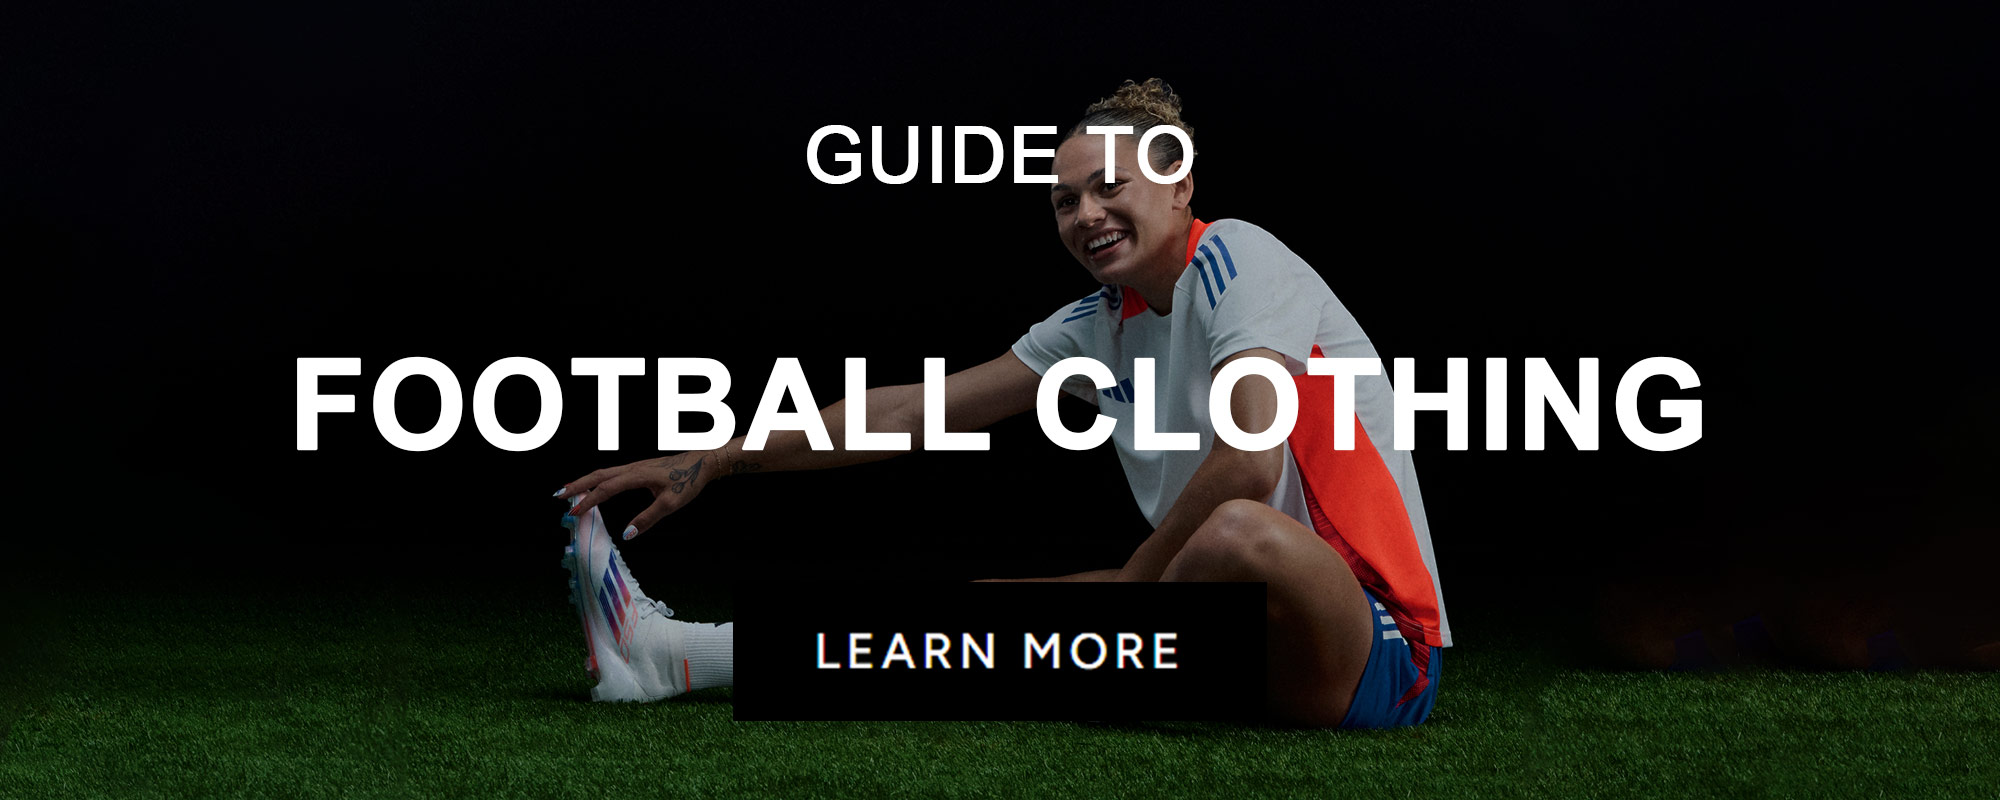 GUIDES_CLOTHES_FootballClothing.jpg